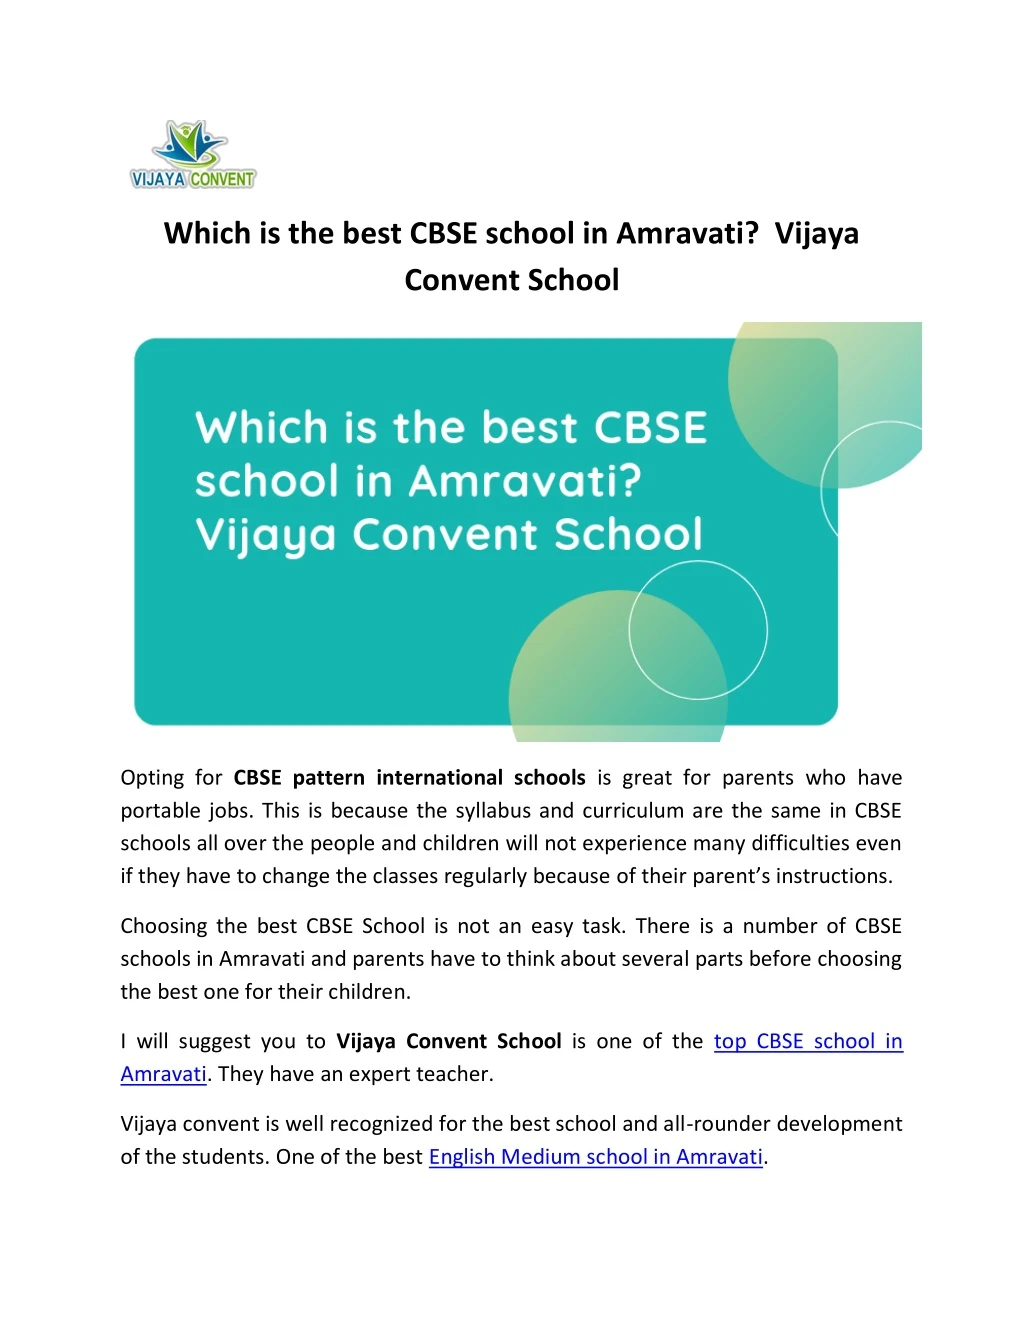 which is the best cbse school in amravati vijaya